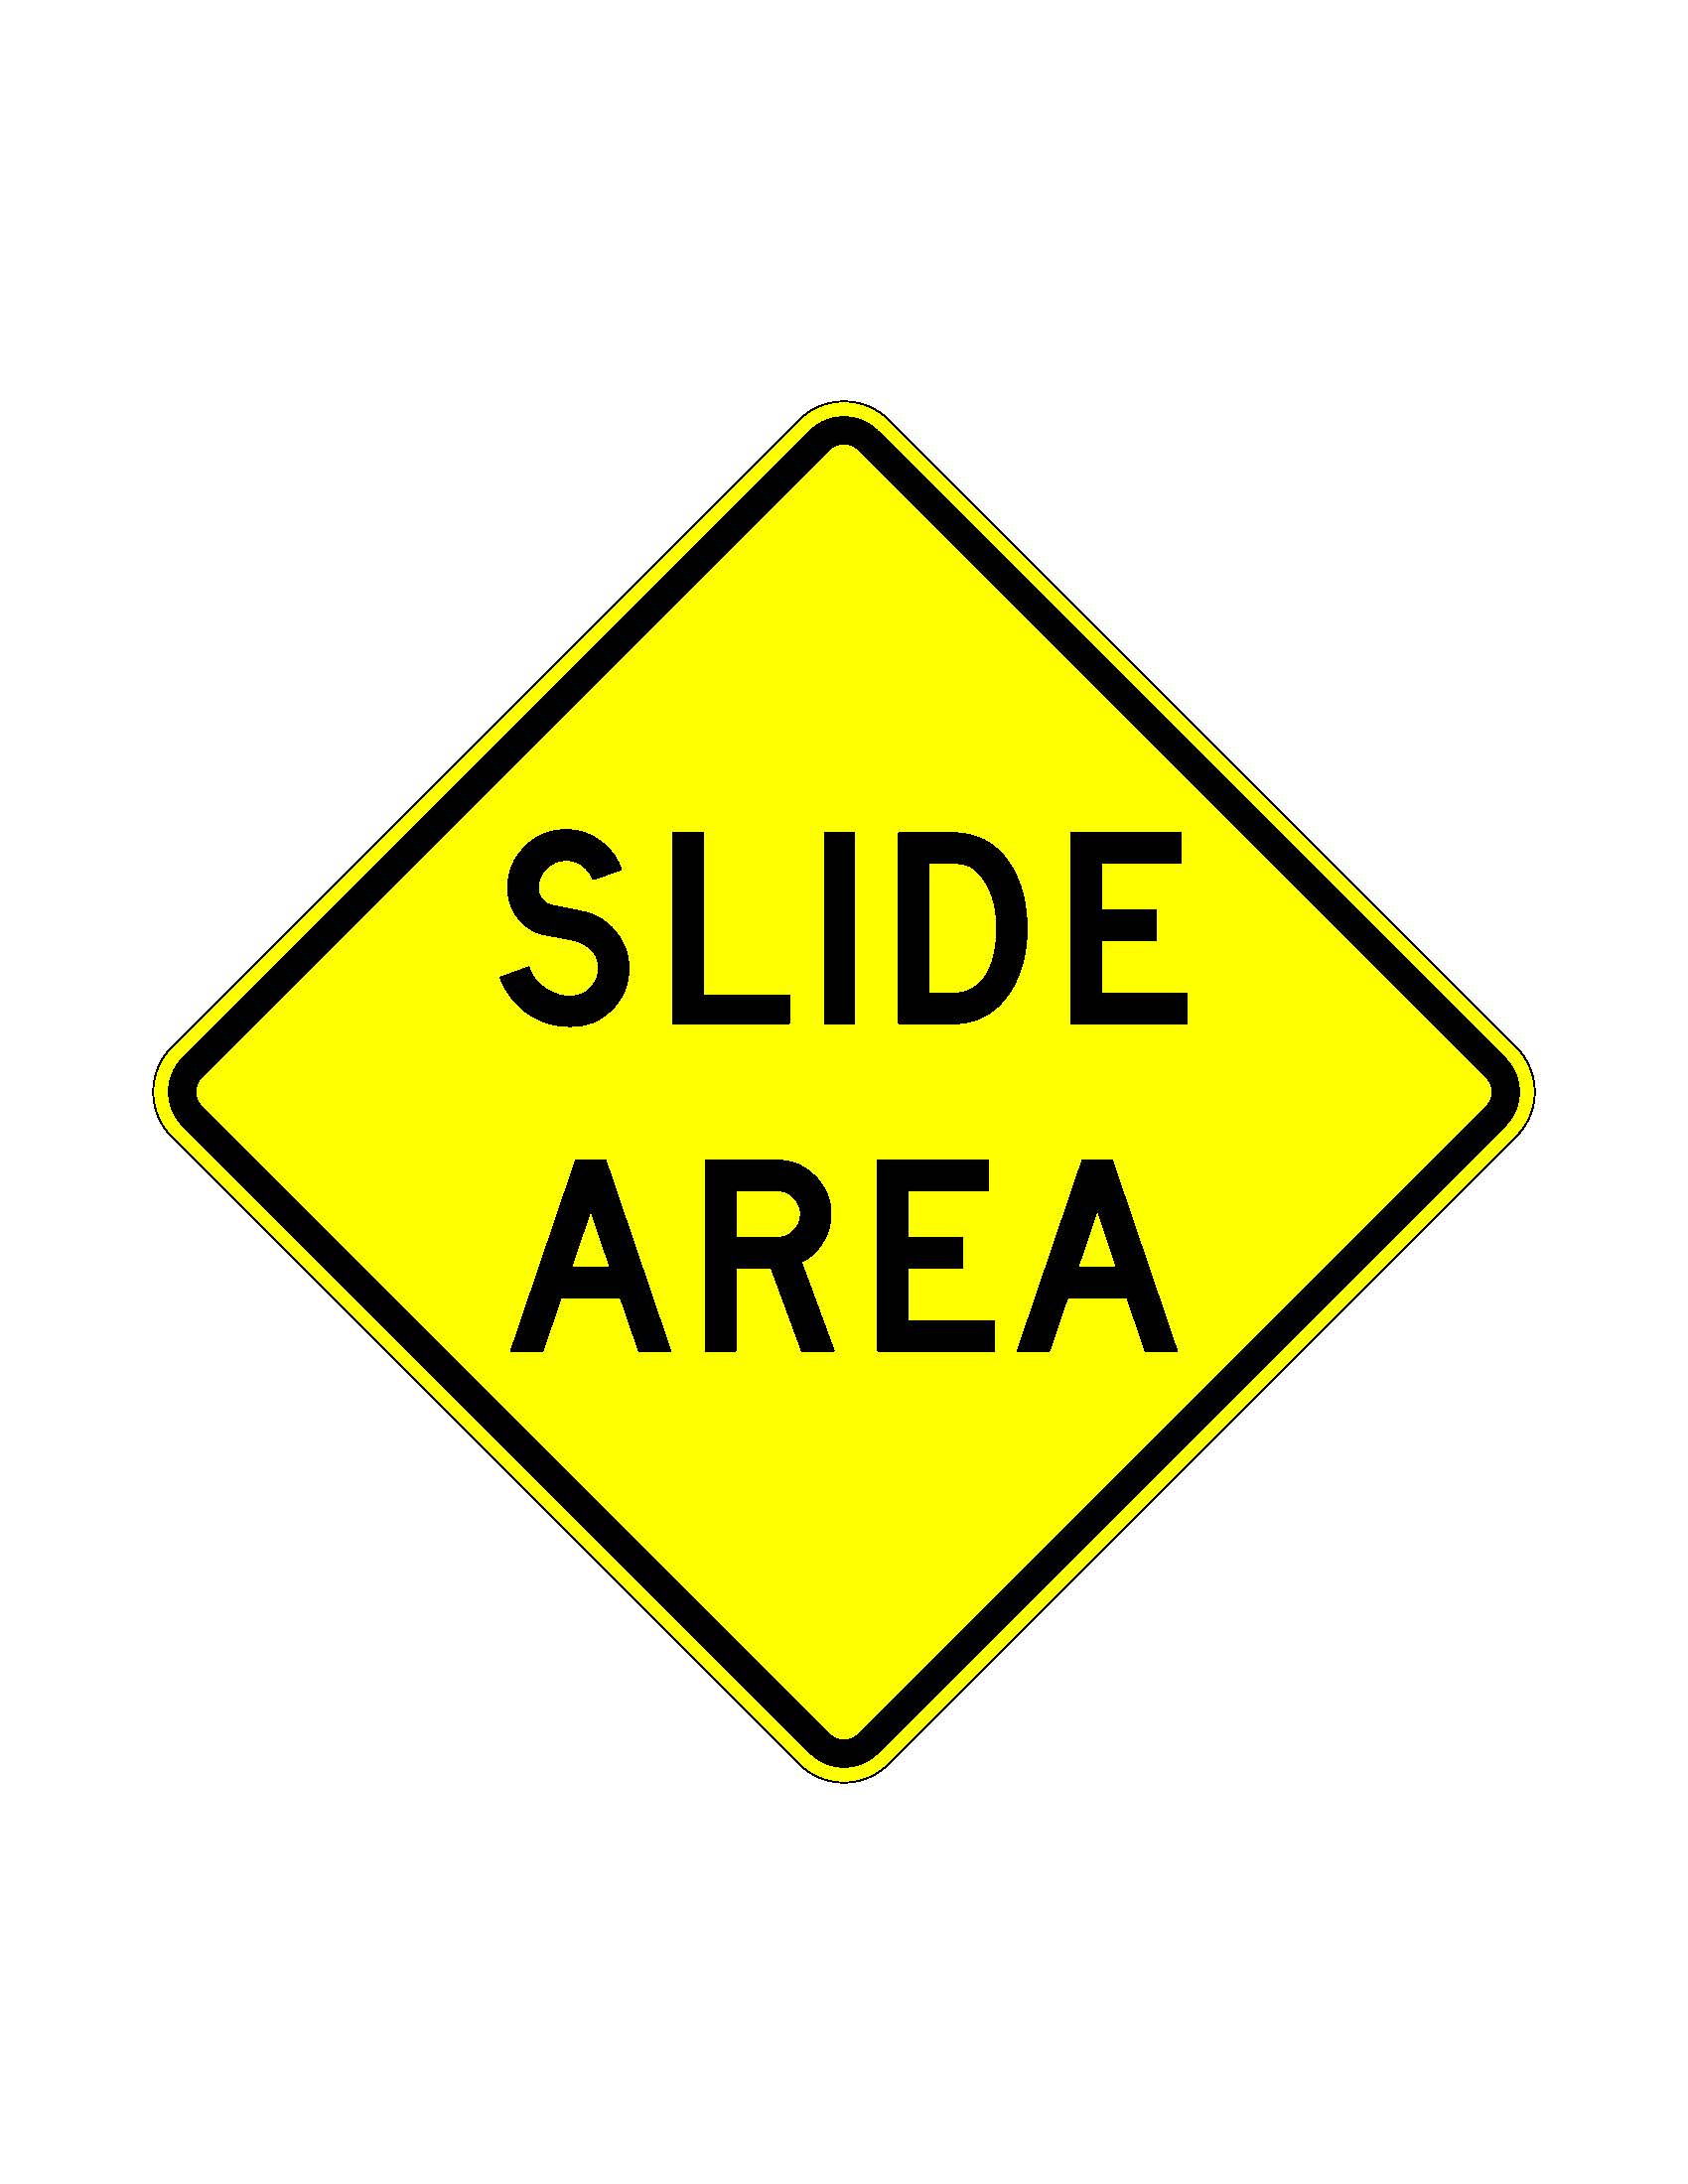 W8-51 Slide Area JPEG detail image